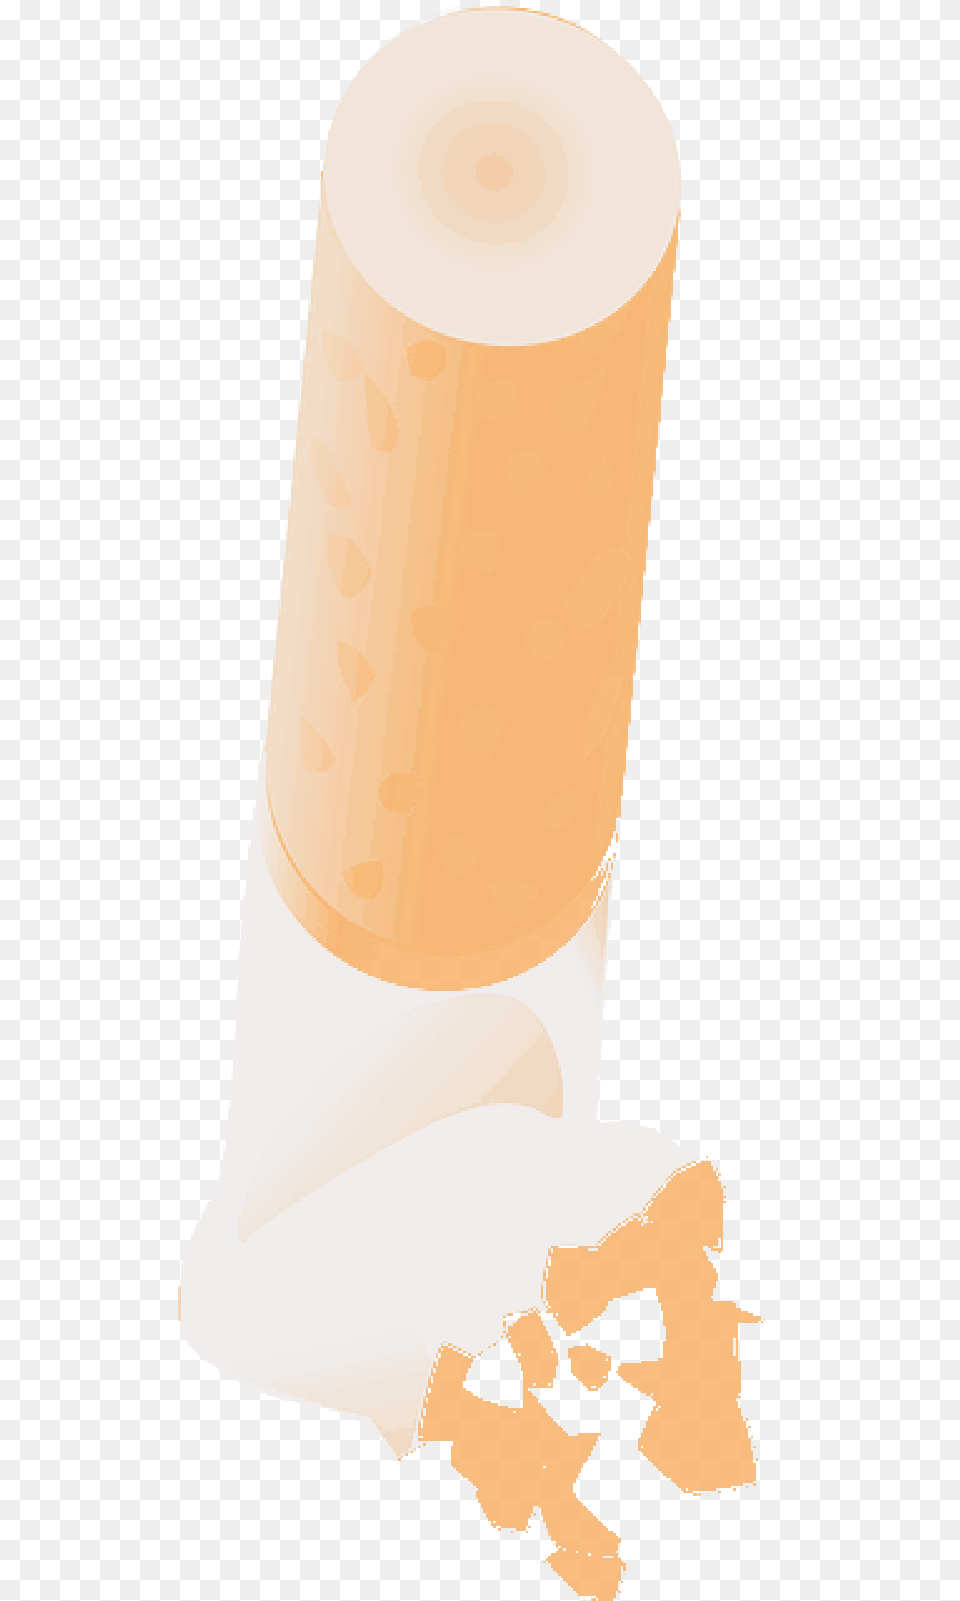 Ciggy Cigarette Smoke Smoking Filter Nicotine Public Illustration, Bandage, First Aid Free Png Download